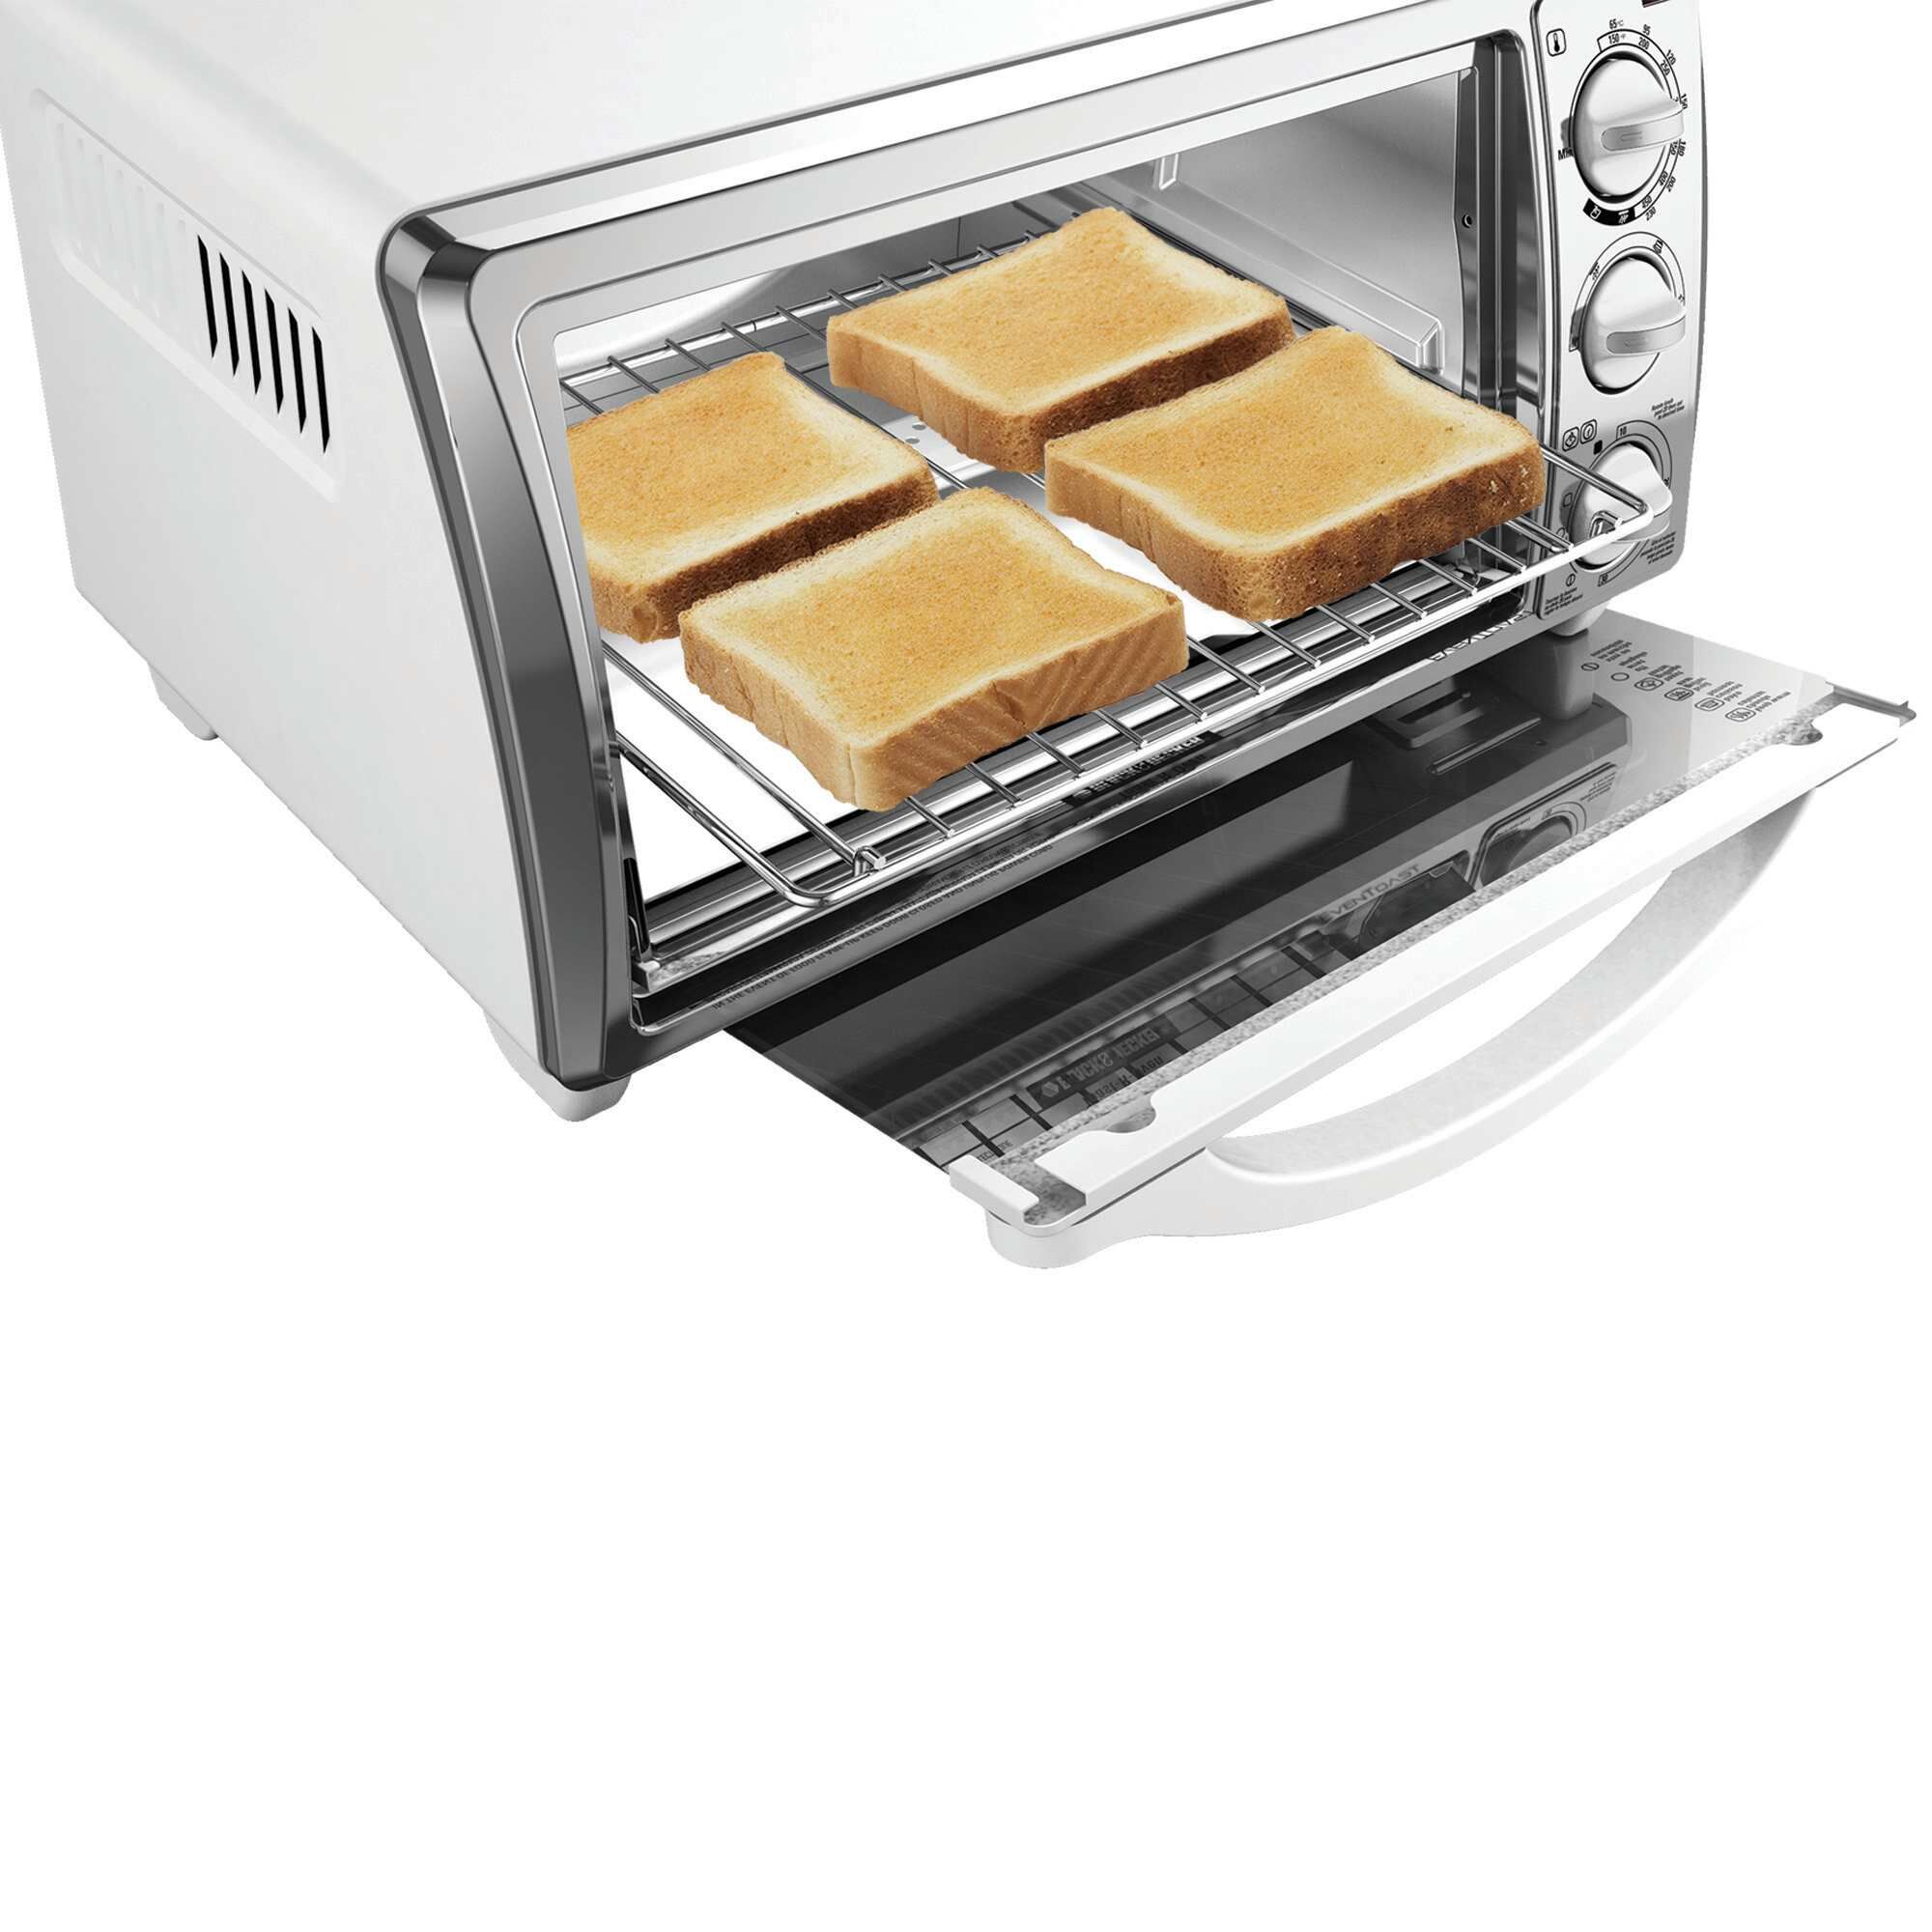 4 Slice Toaster Oven.